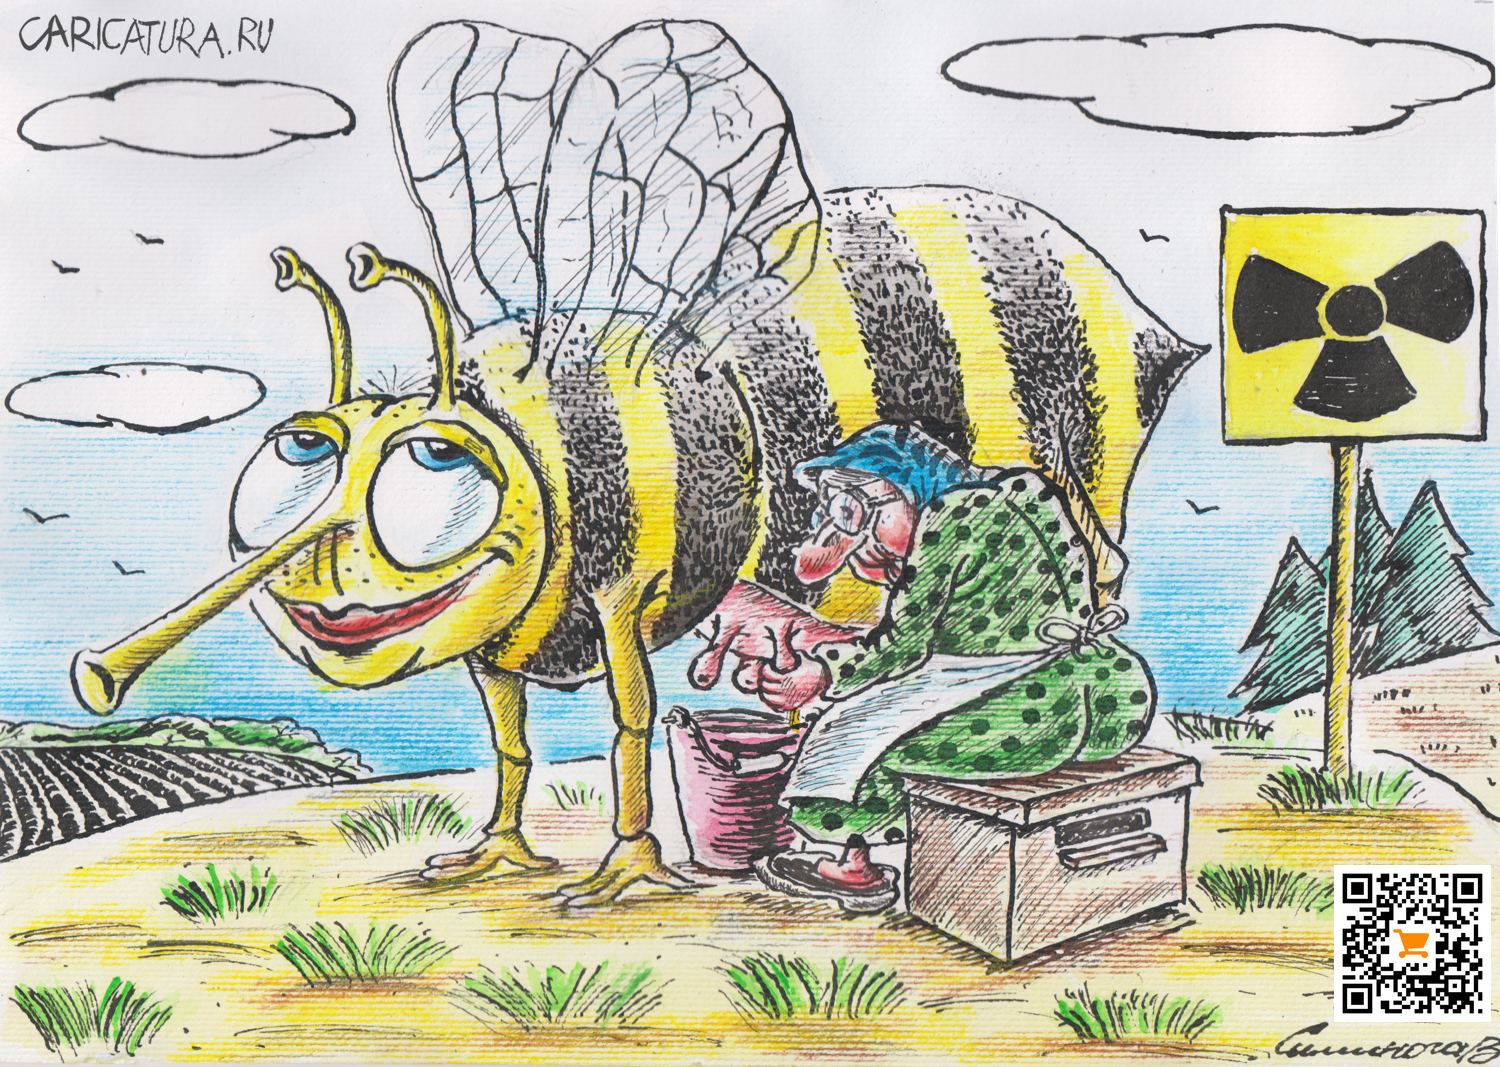 Карикатура "Надой", Vadim Siminoga